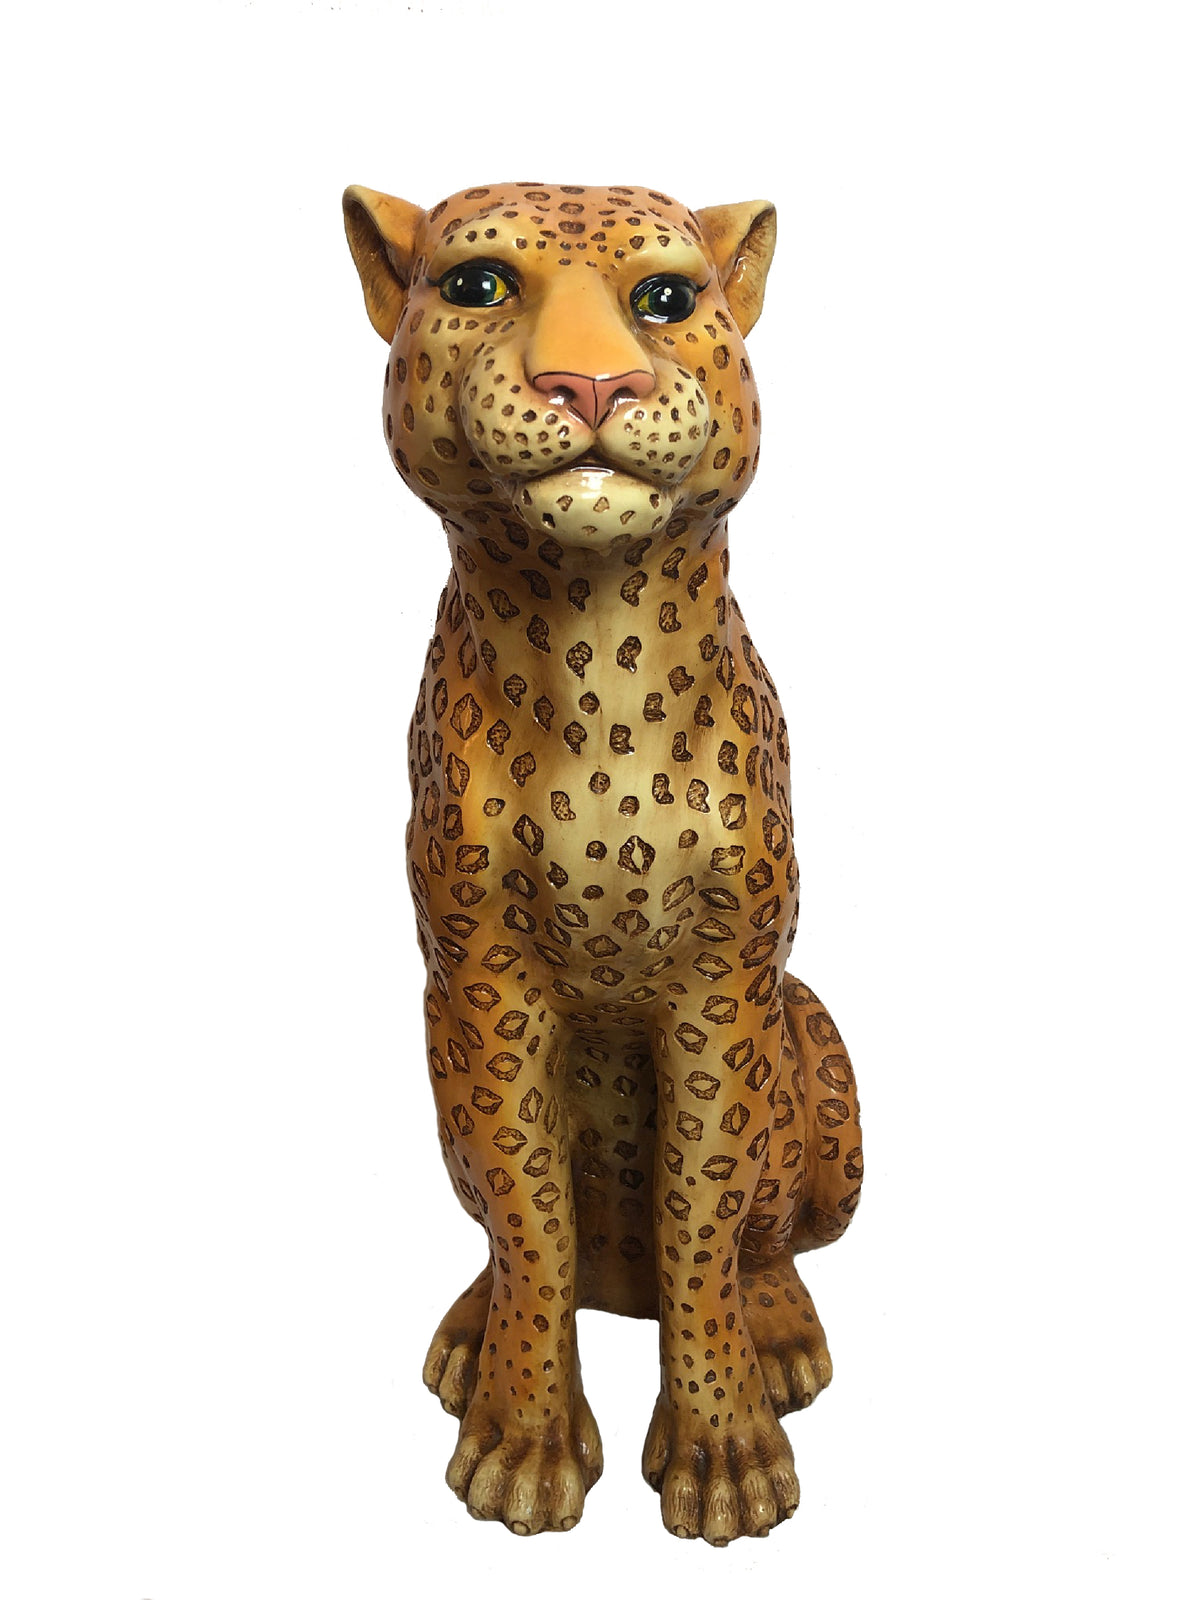 Vintage Hand-Painted Ceramic Cheetah Sculpture